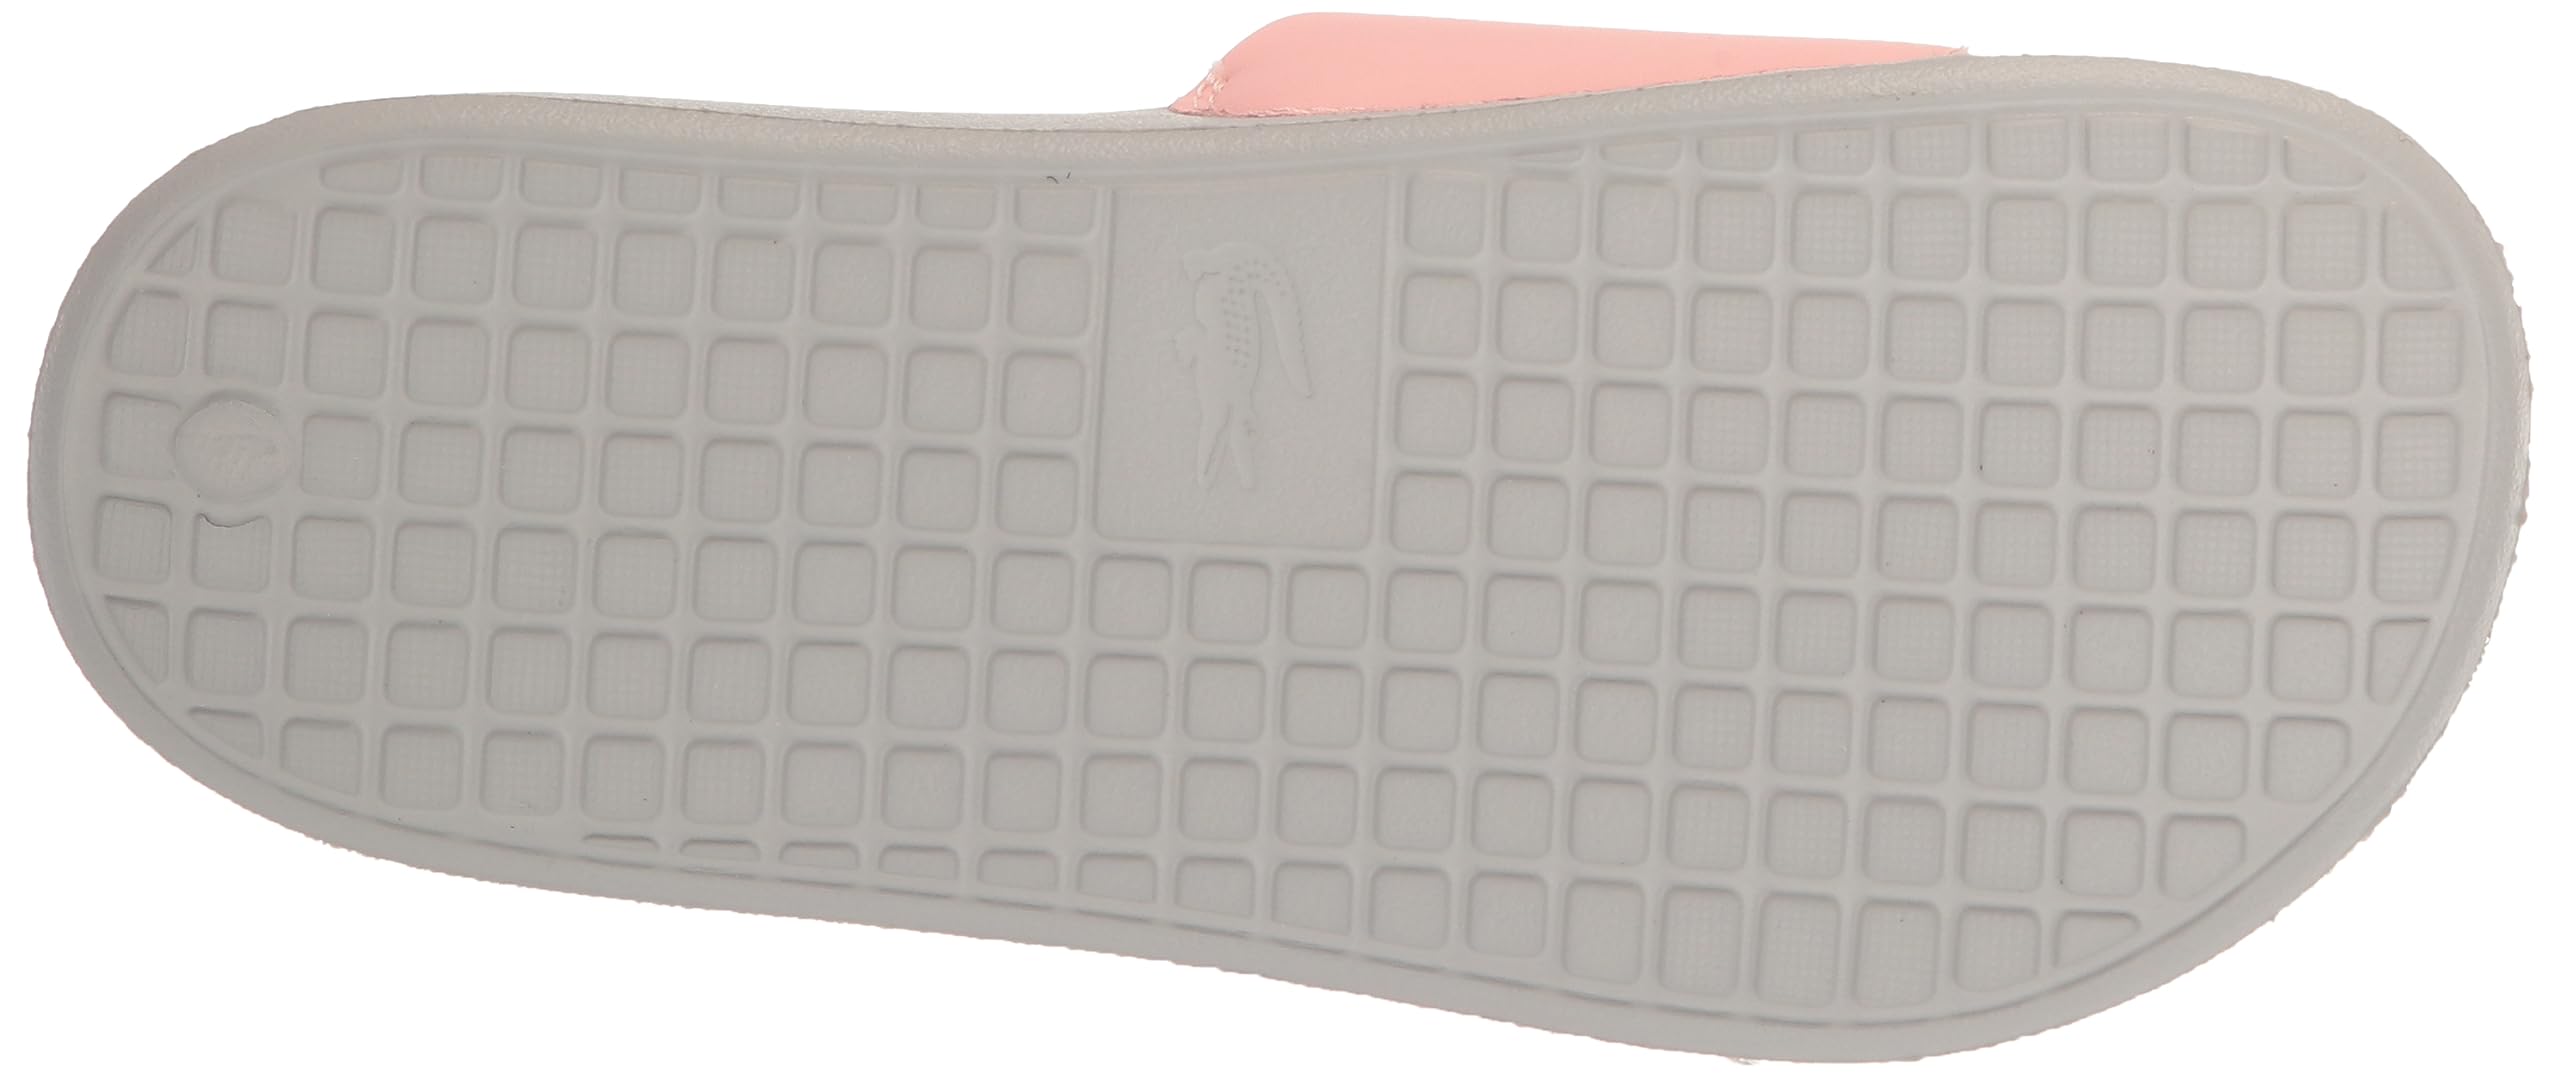 Lacoste Women's Serve Slide 1.0 Sandal